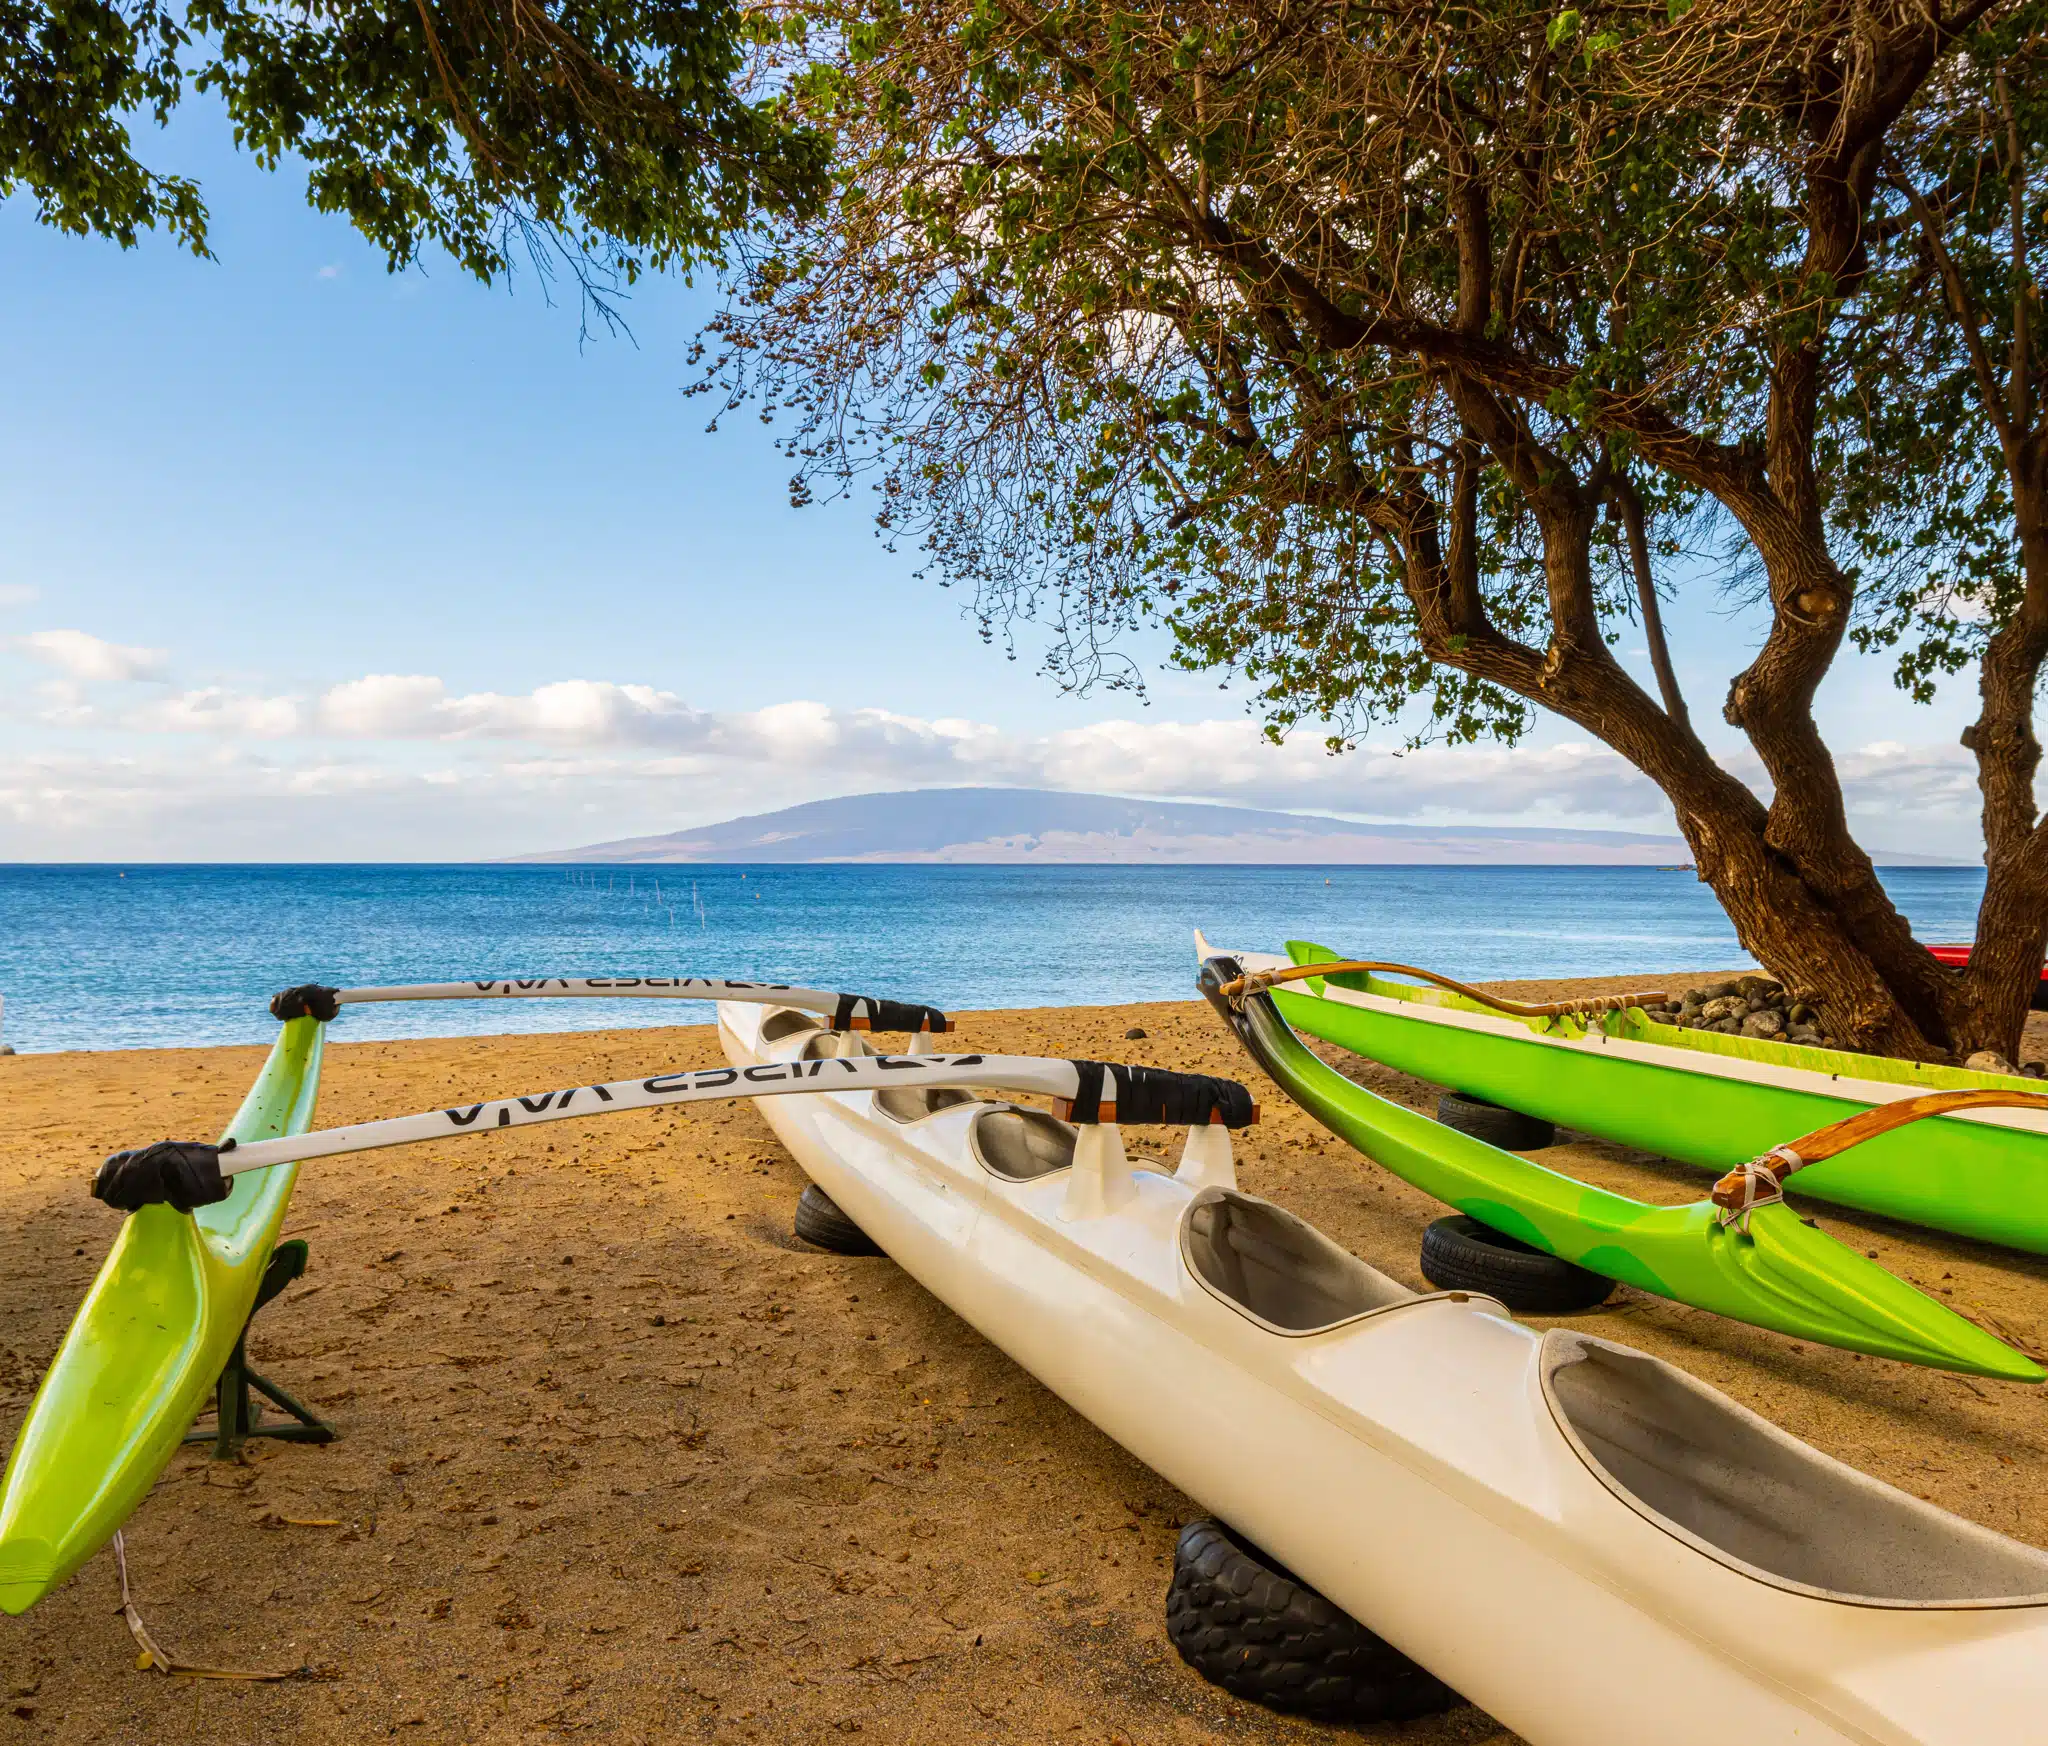 Hanakao'o Beach Park is a Beach located in the city of Lahaina on Maui, Hawaii